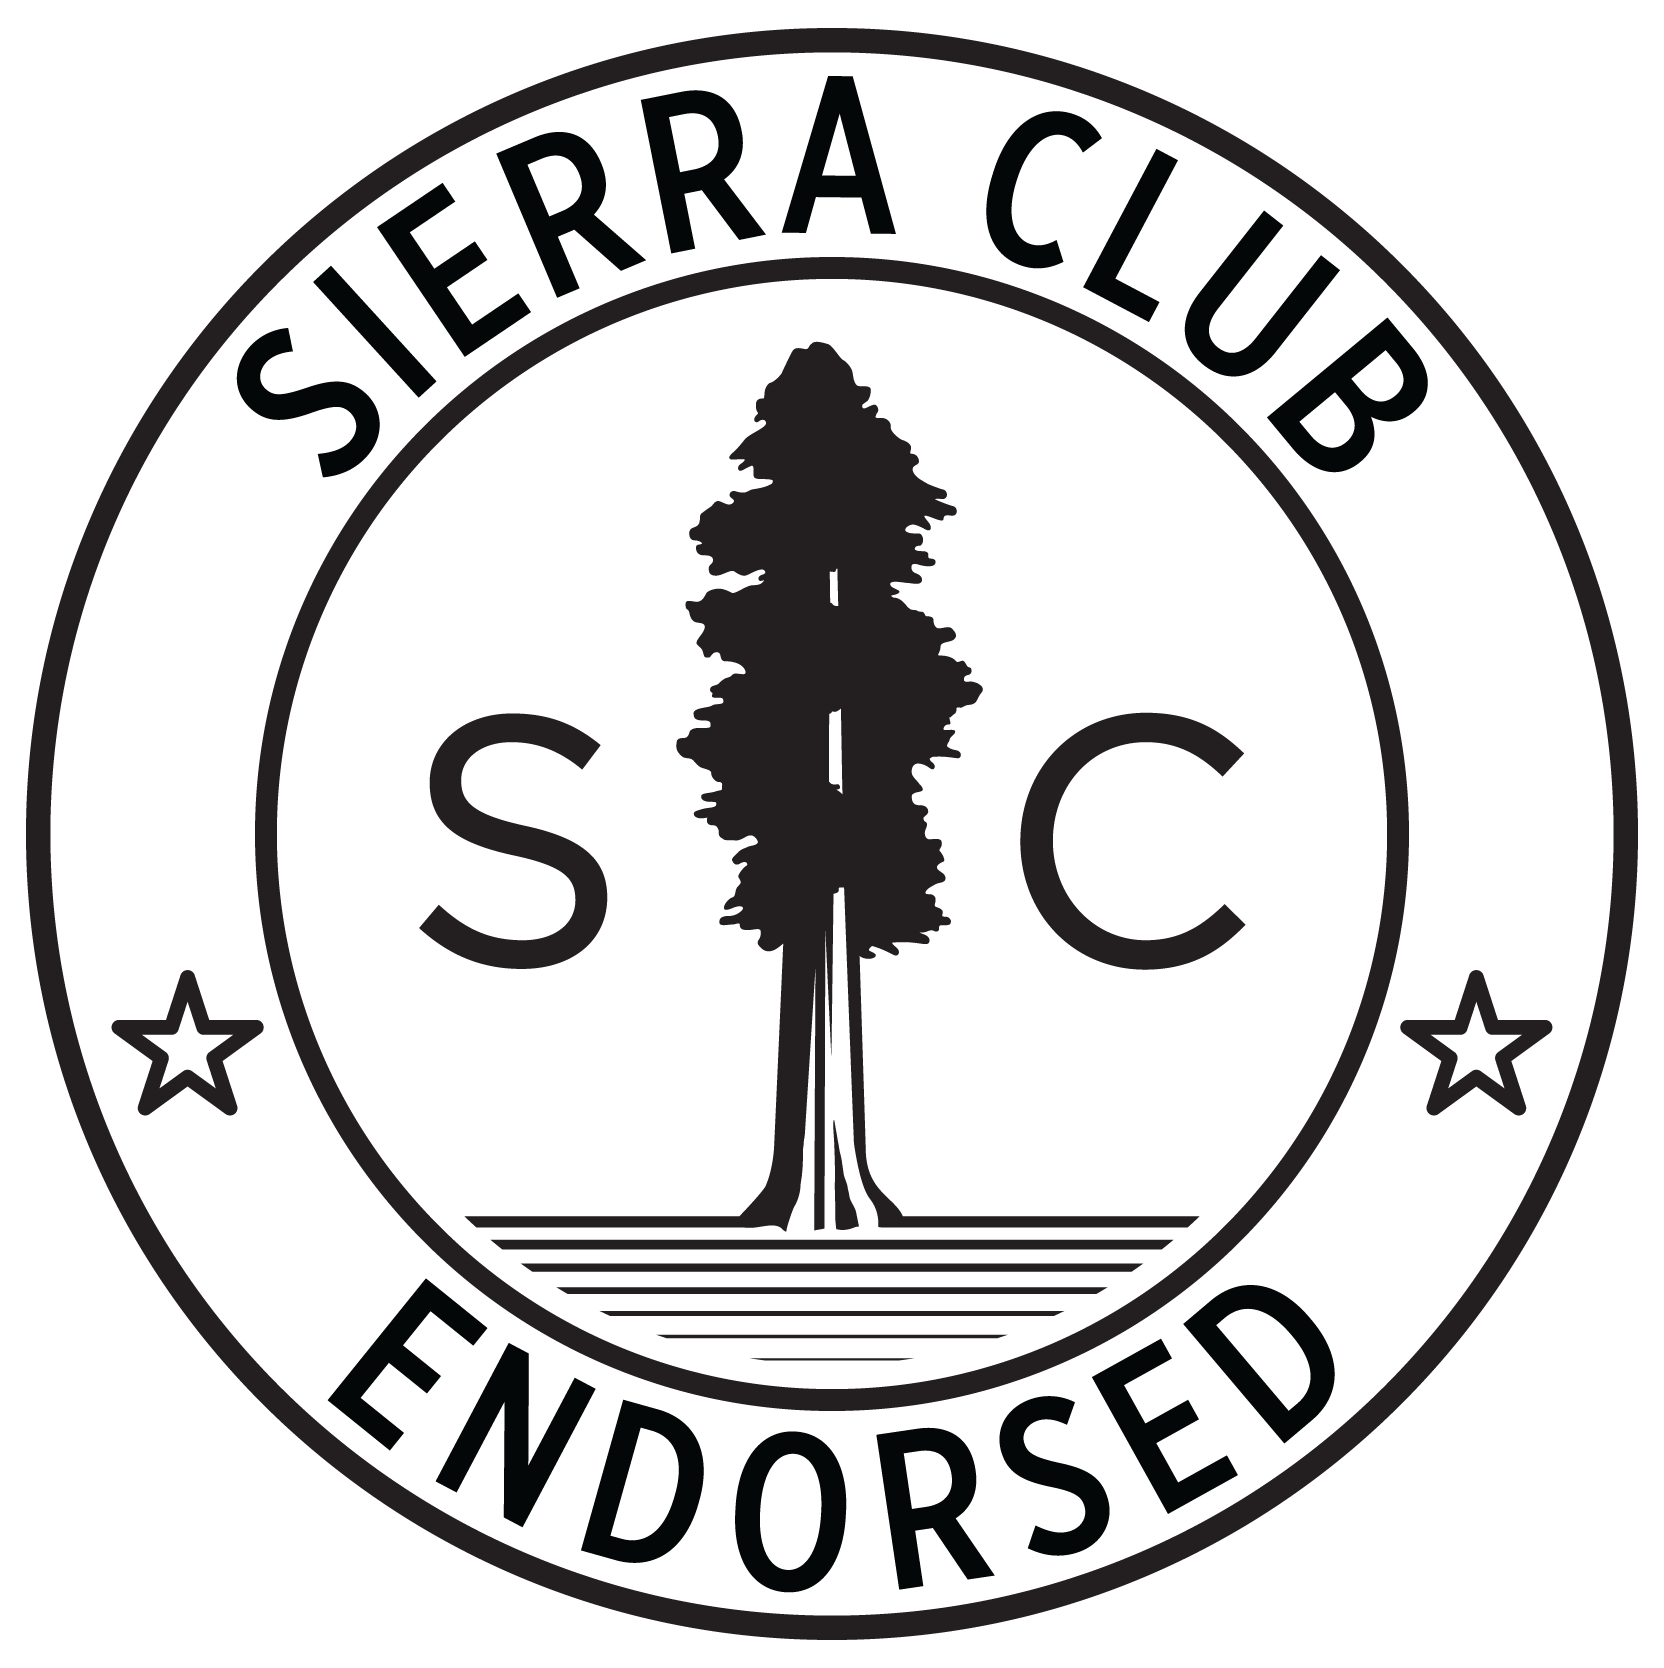 Endorsed by the Sierra Club